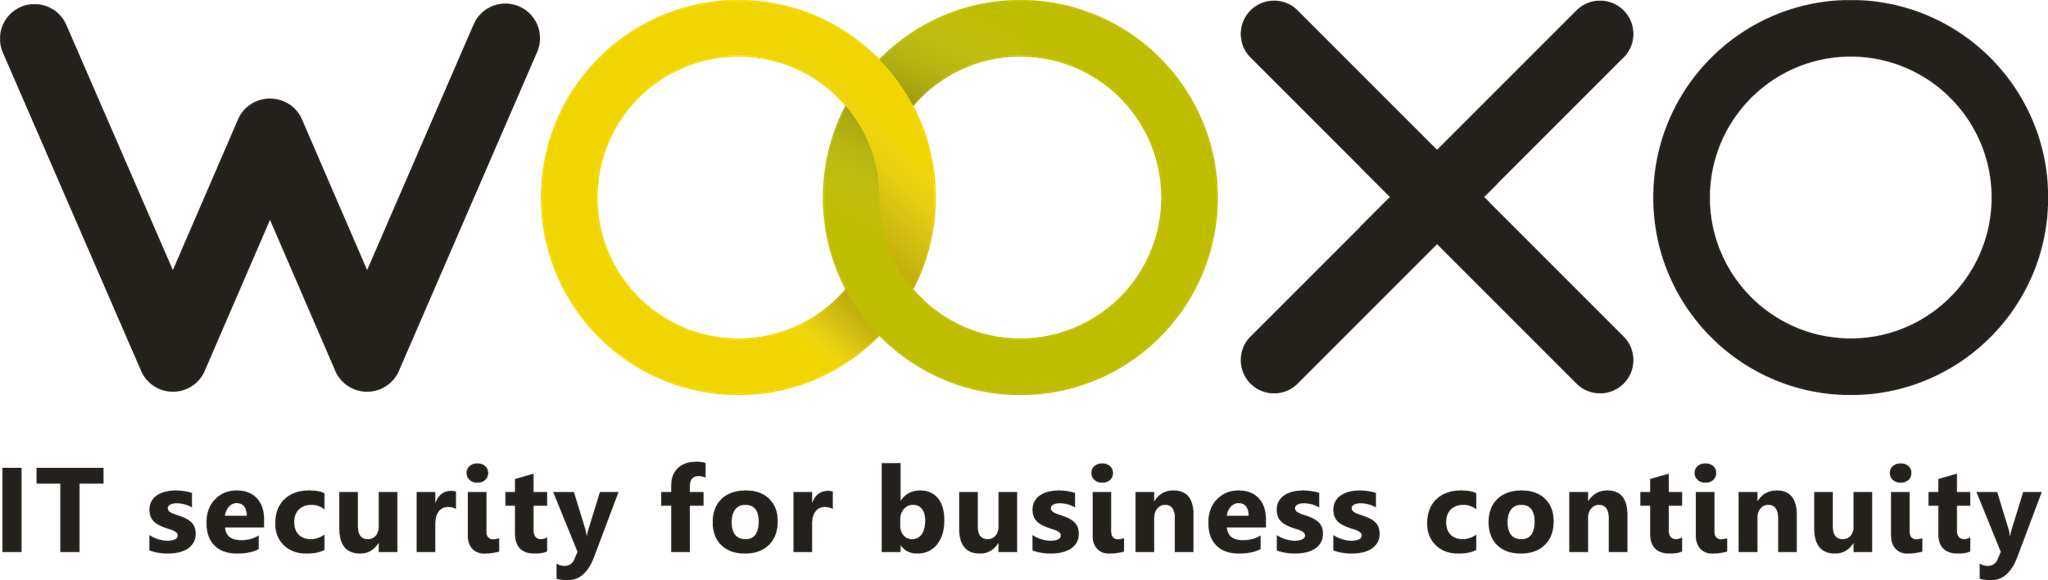 Logo-Wooxo---RVB